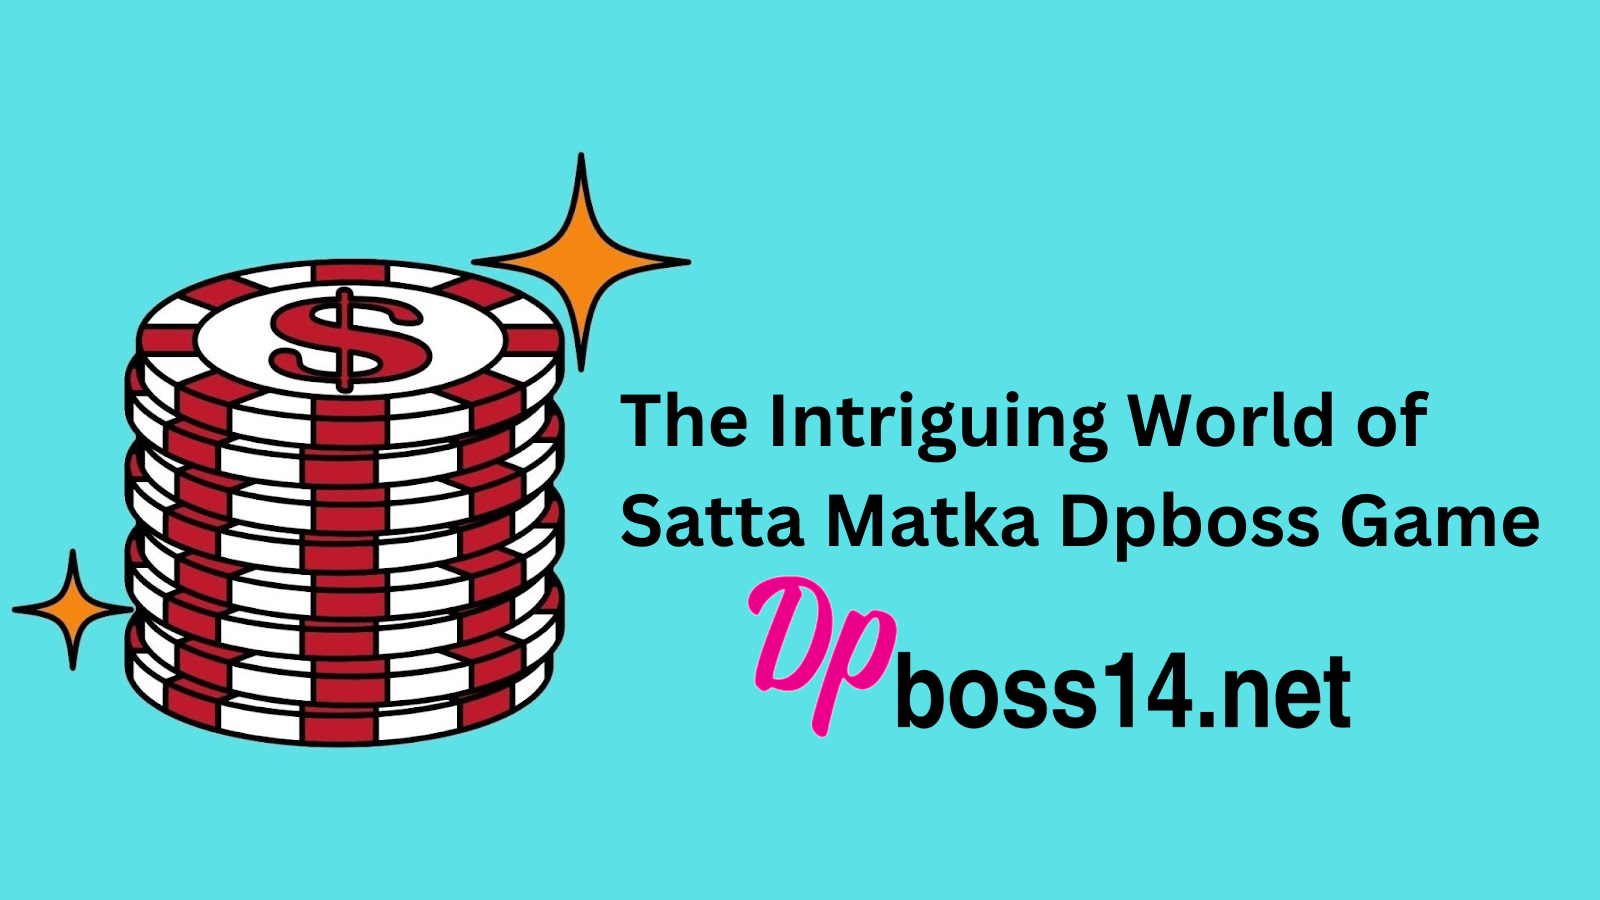 The Intriguing World of Satta Matka Dpboss Game